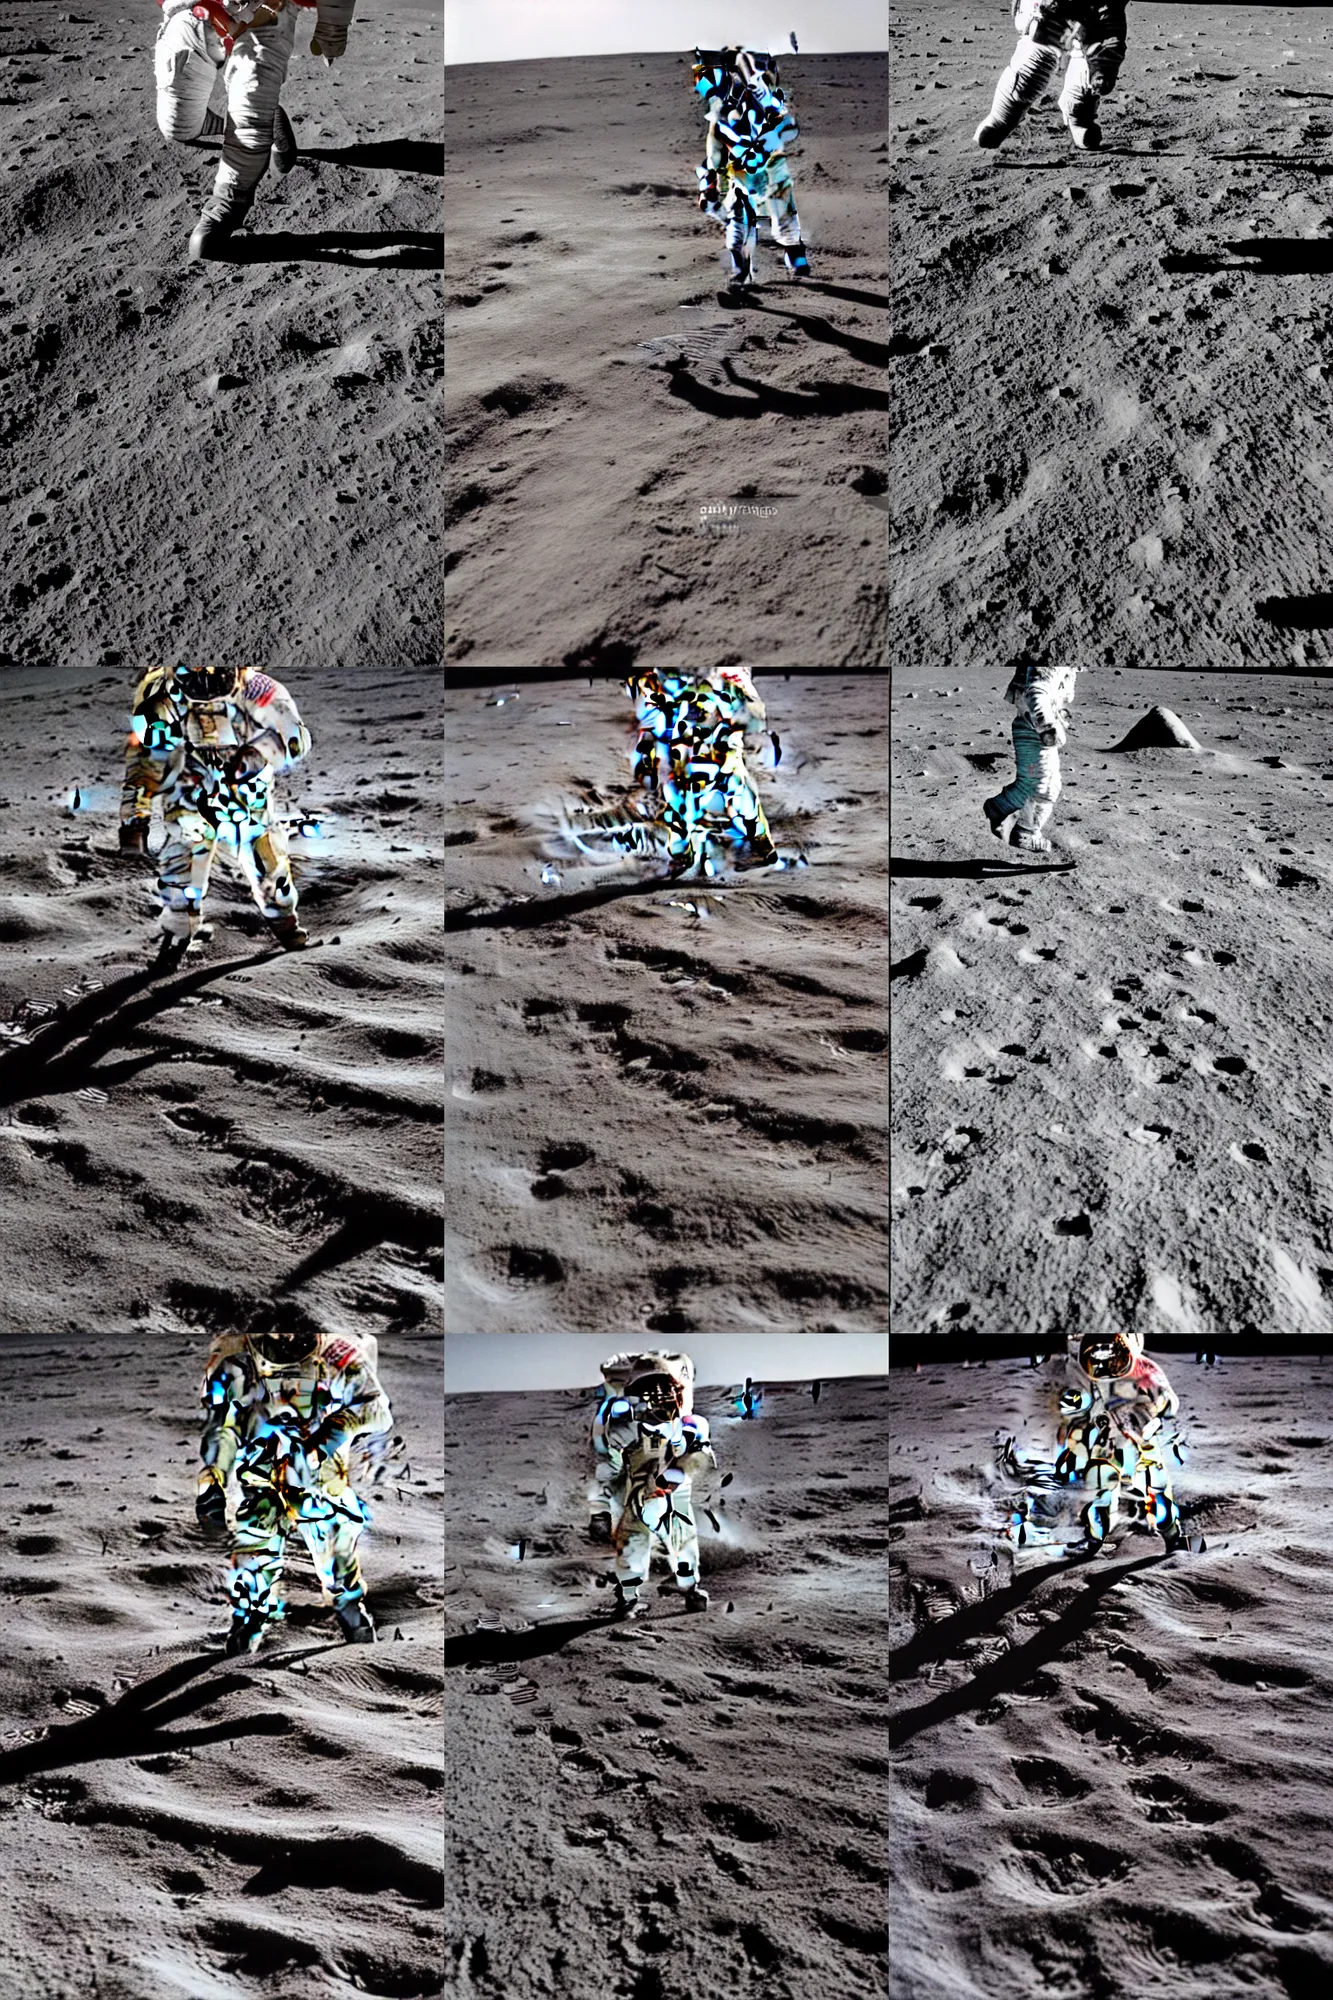 Prompt: nasa photo of a man running a marathon on the moon, 1 9 6 9